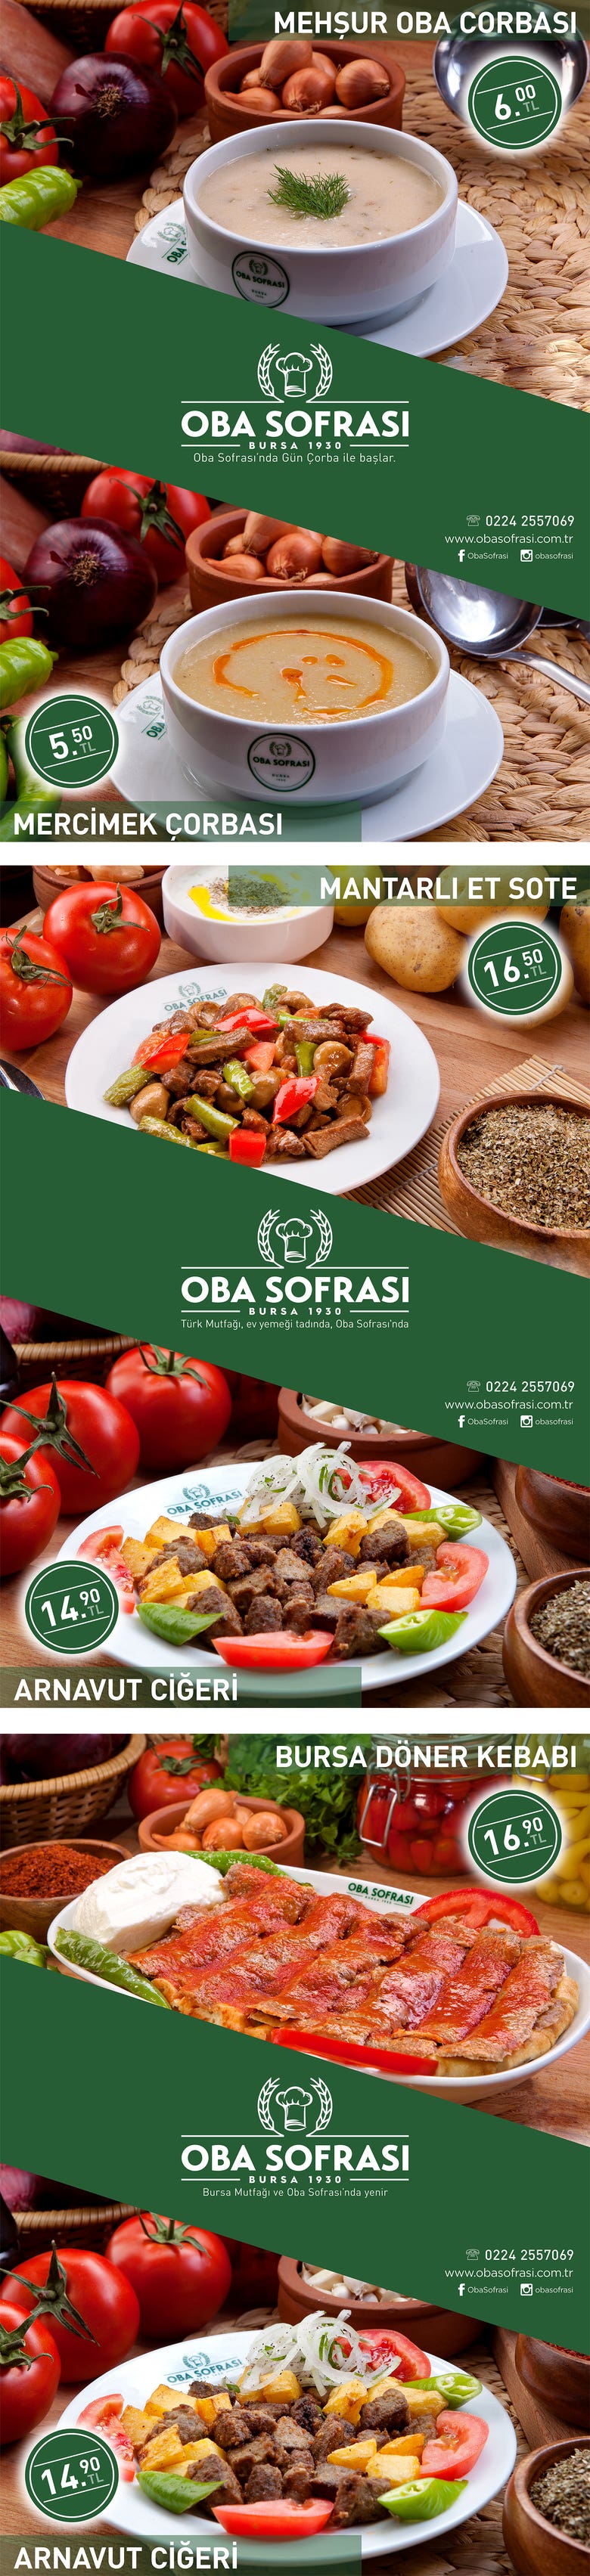 Oba Sofrası poster design / TURKIYE